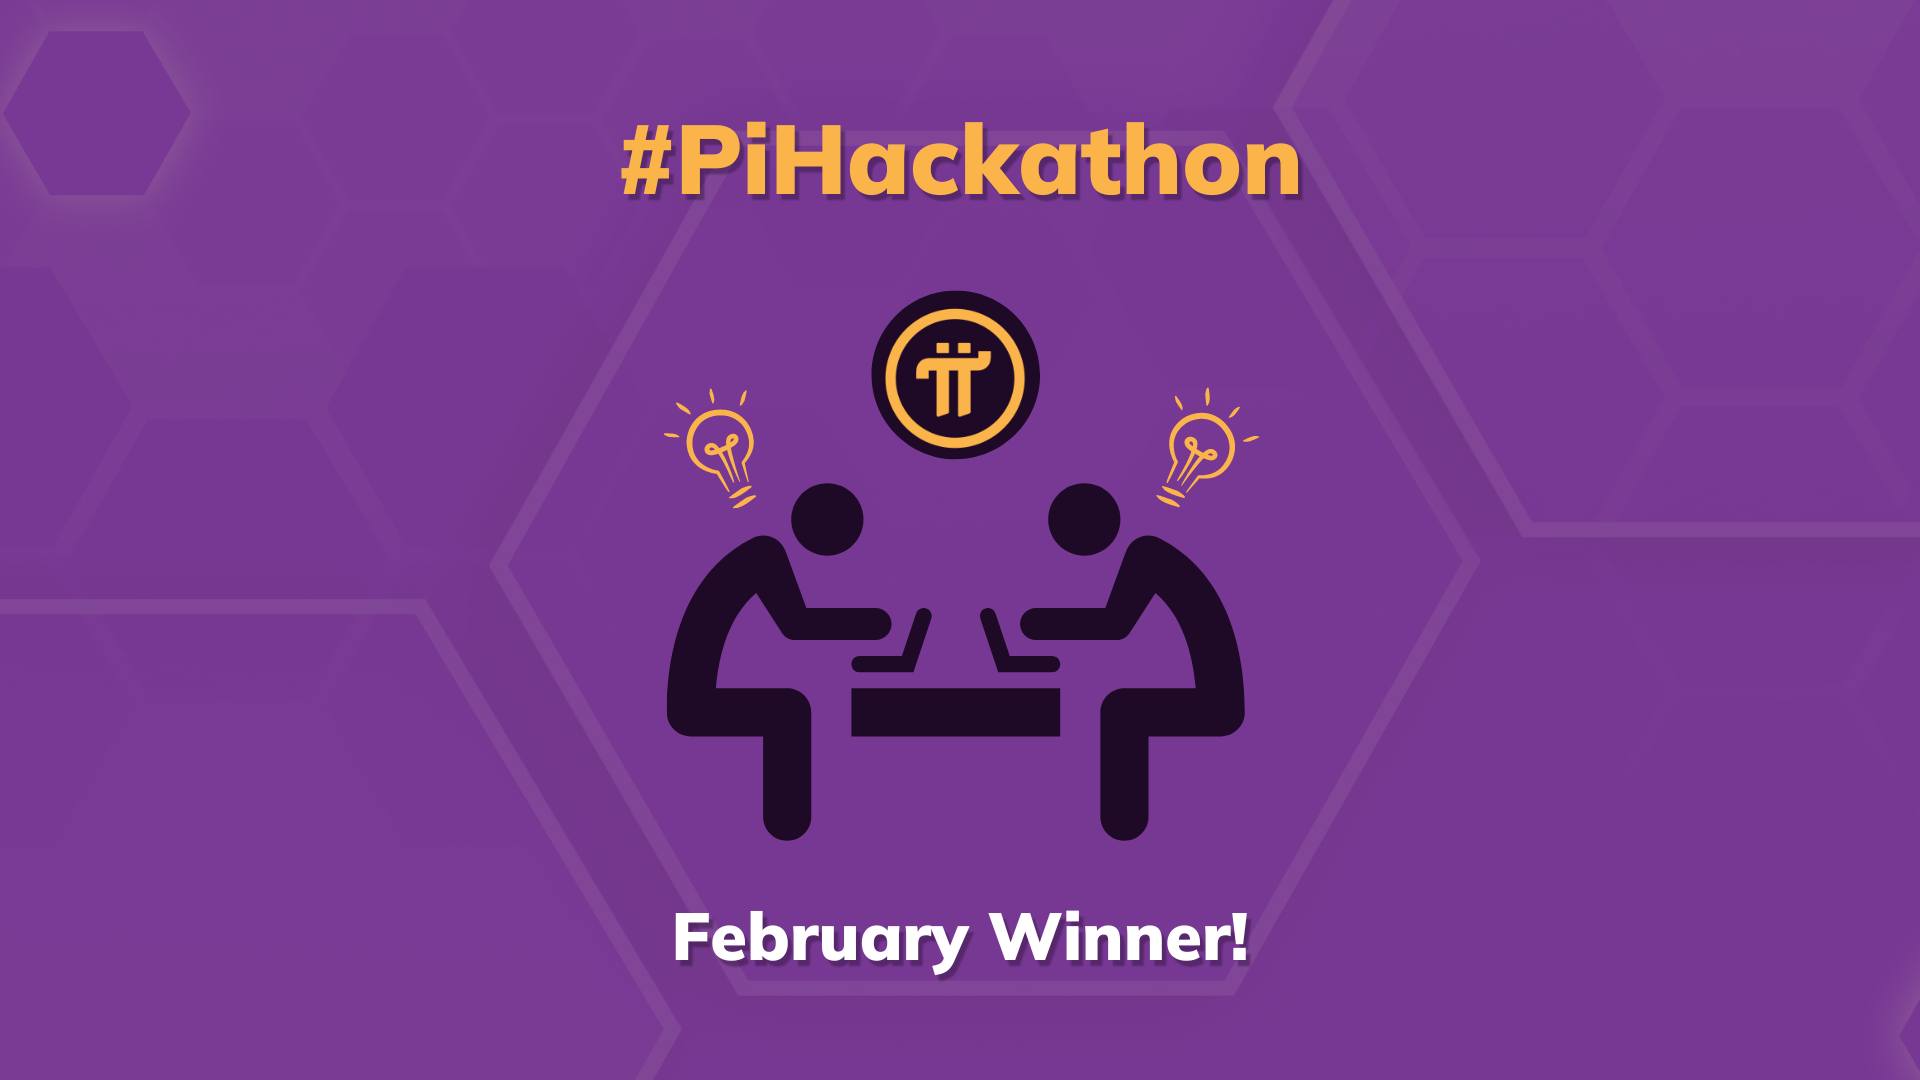 Announcing the February #PiHackathon Winner